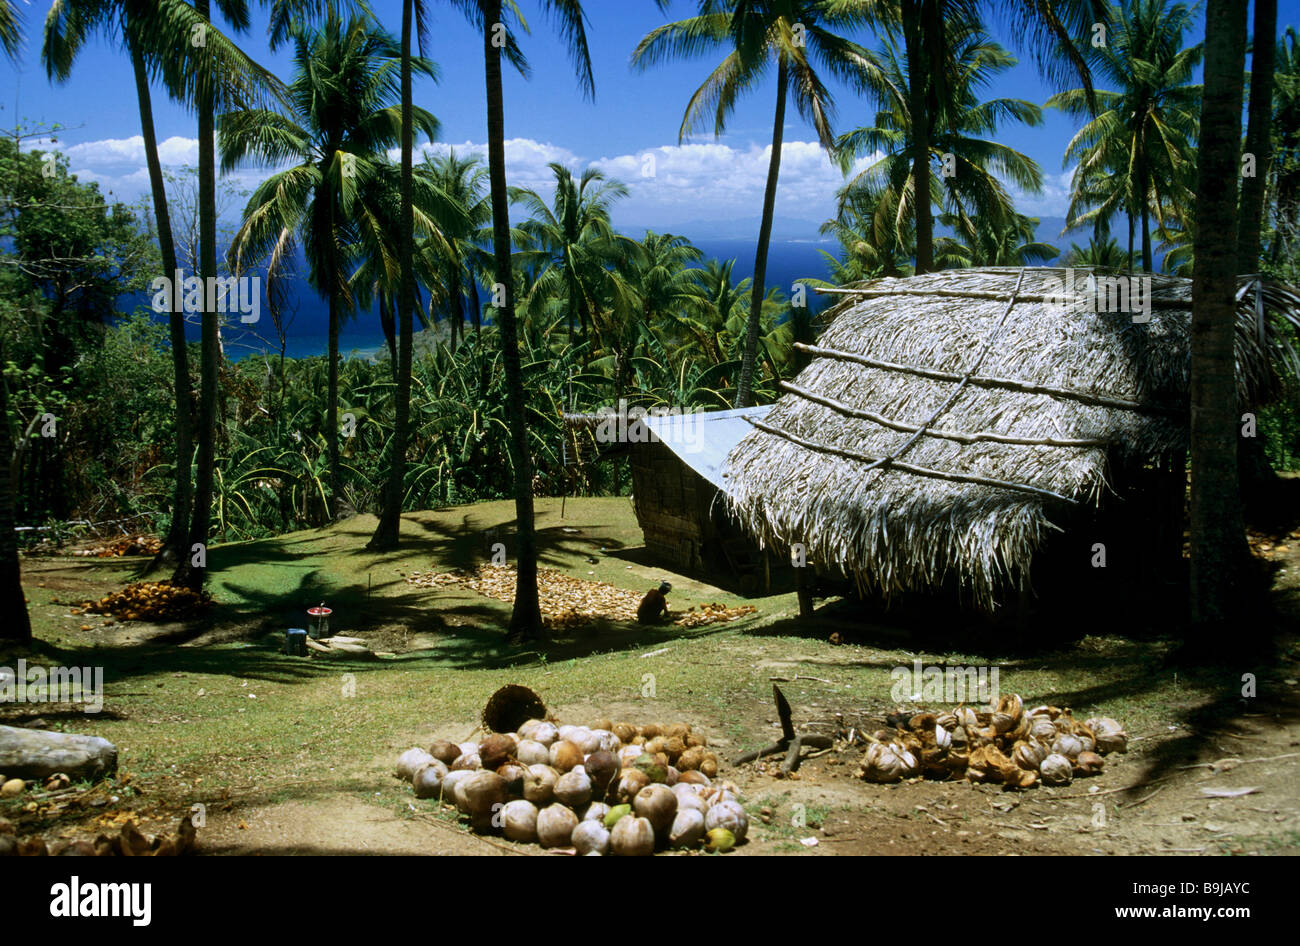 Coconut plantation, Philippines, Southeast Asia Stock Photo